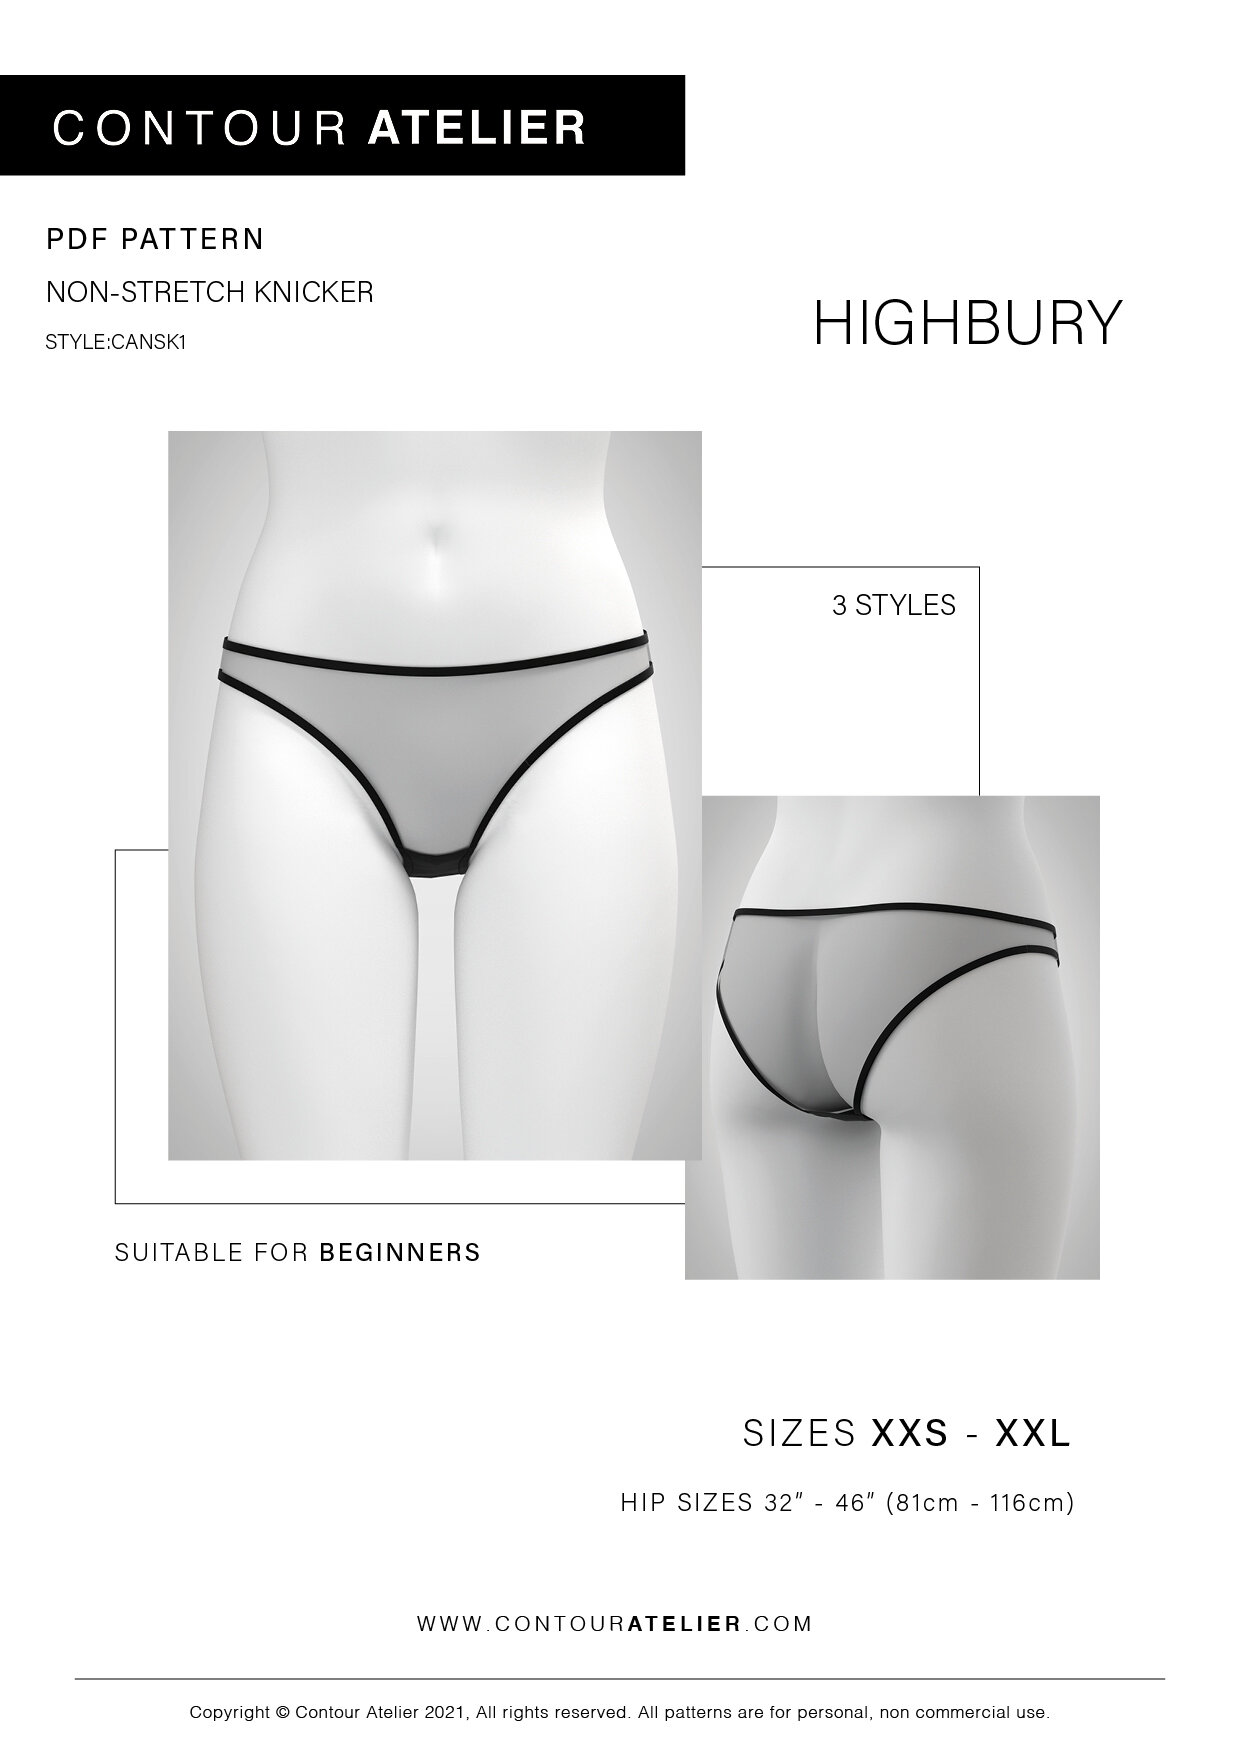 Intimates Underwear/Bra Pattern - HARD COPY OR DIGITAL DOWNLOAD